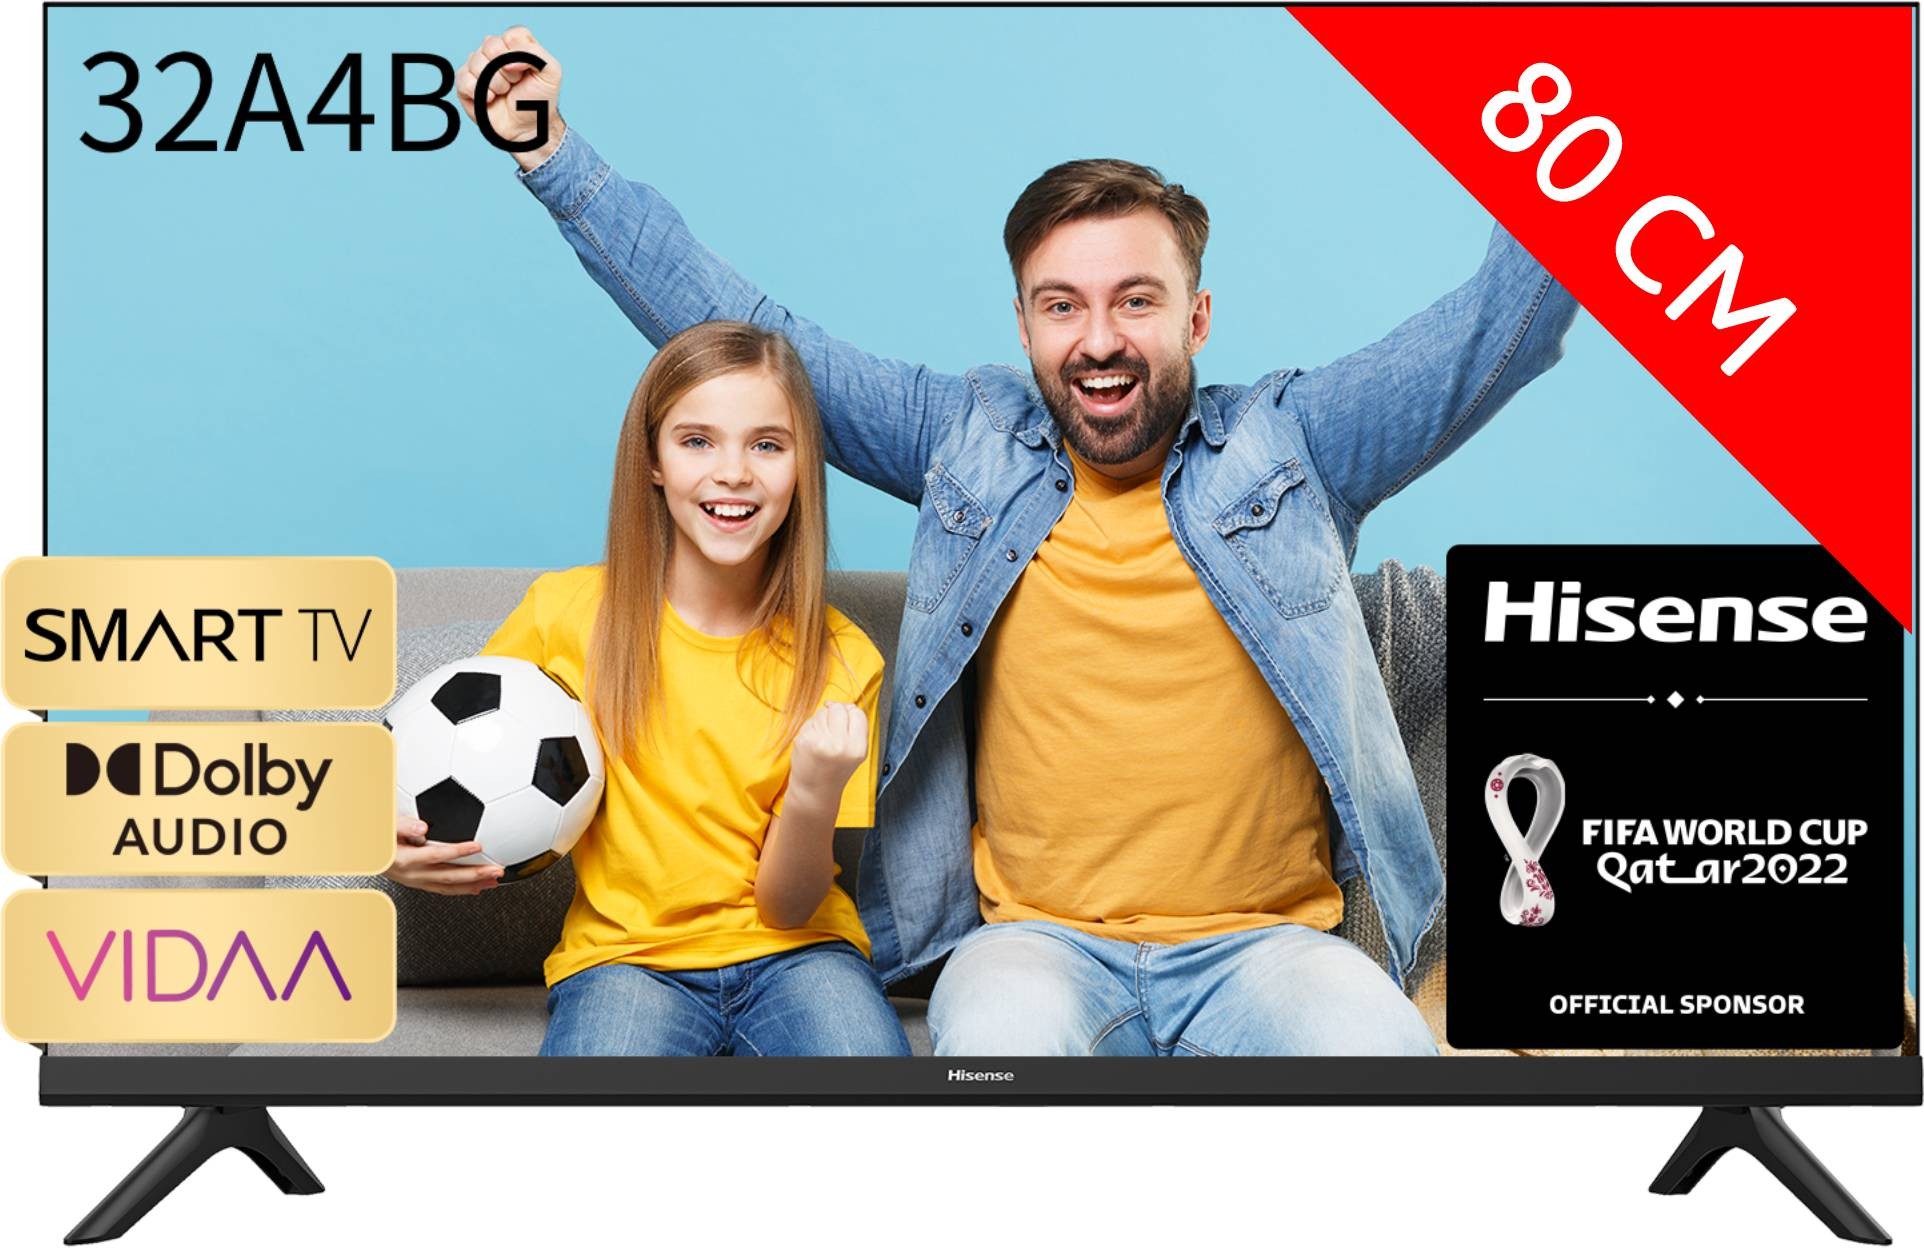 HISENSE TV LED Full HD 80 cm 32"  32A4BG